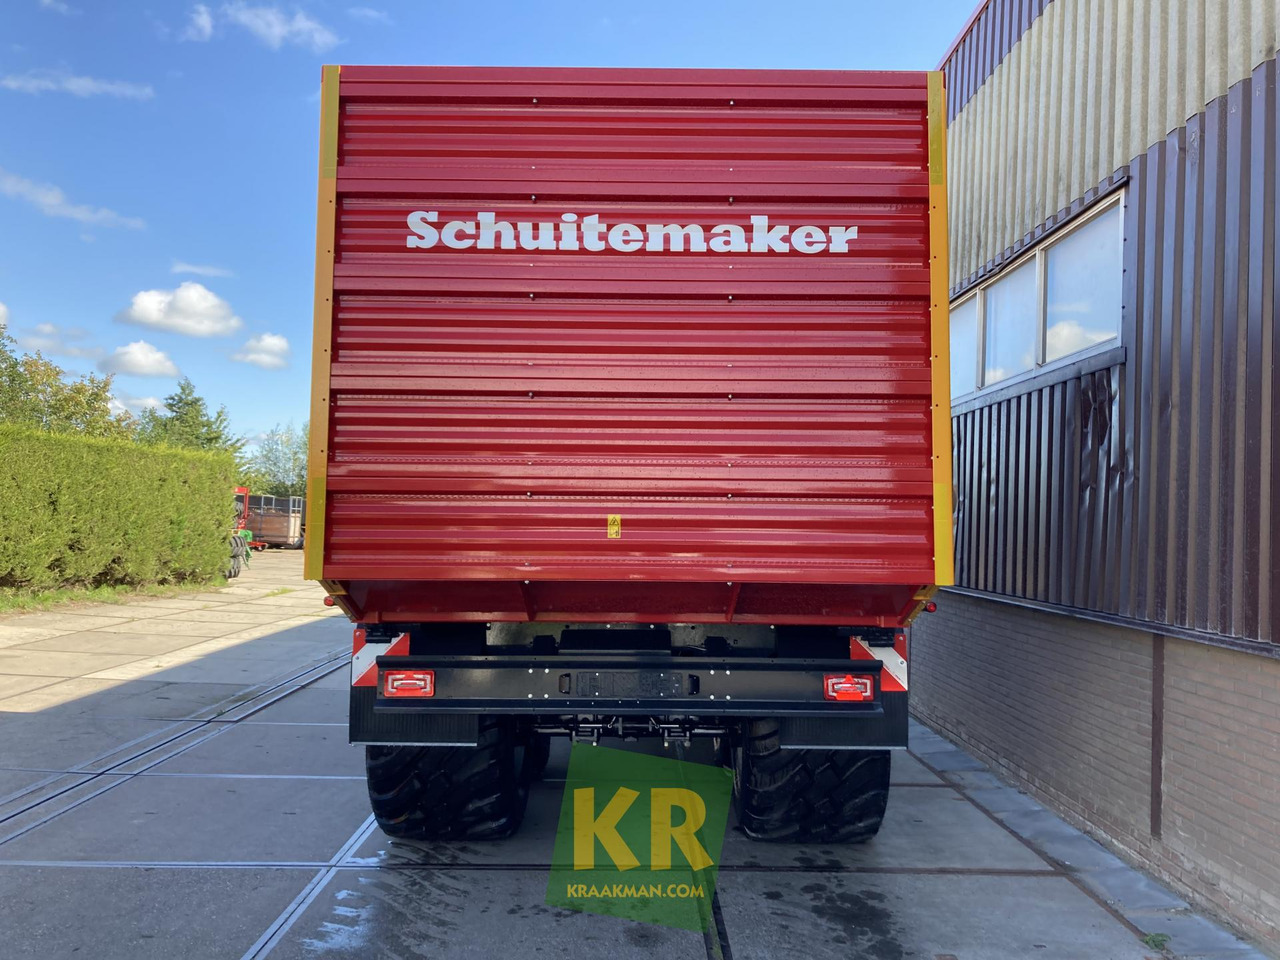 Self-loading wagon RAPIDE 580S Schuitemaker, SR-